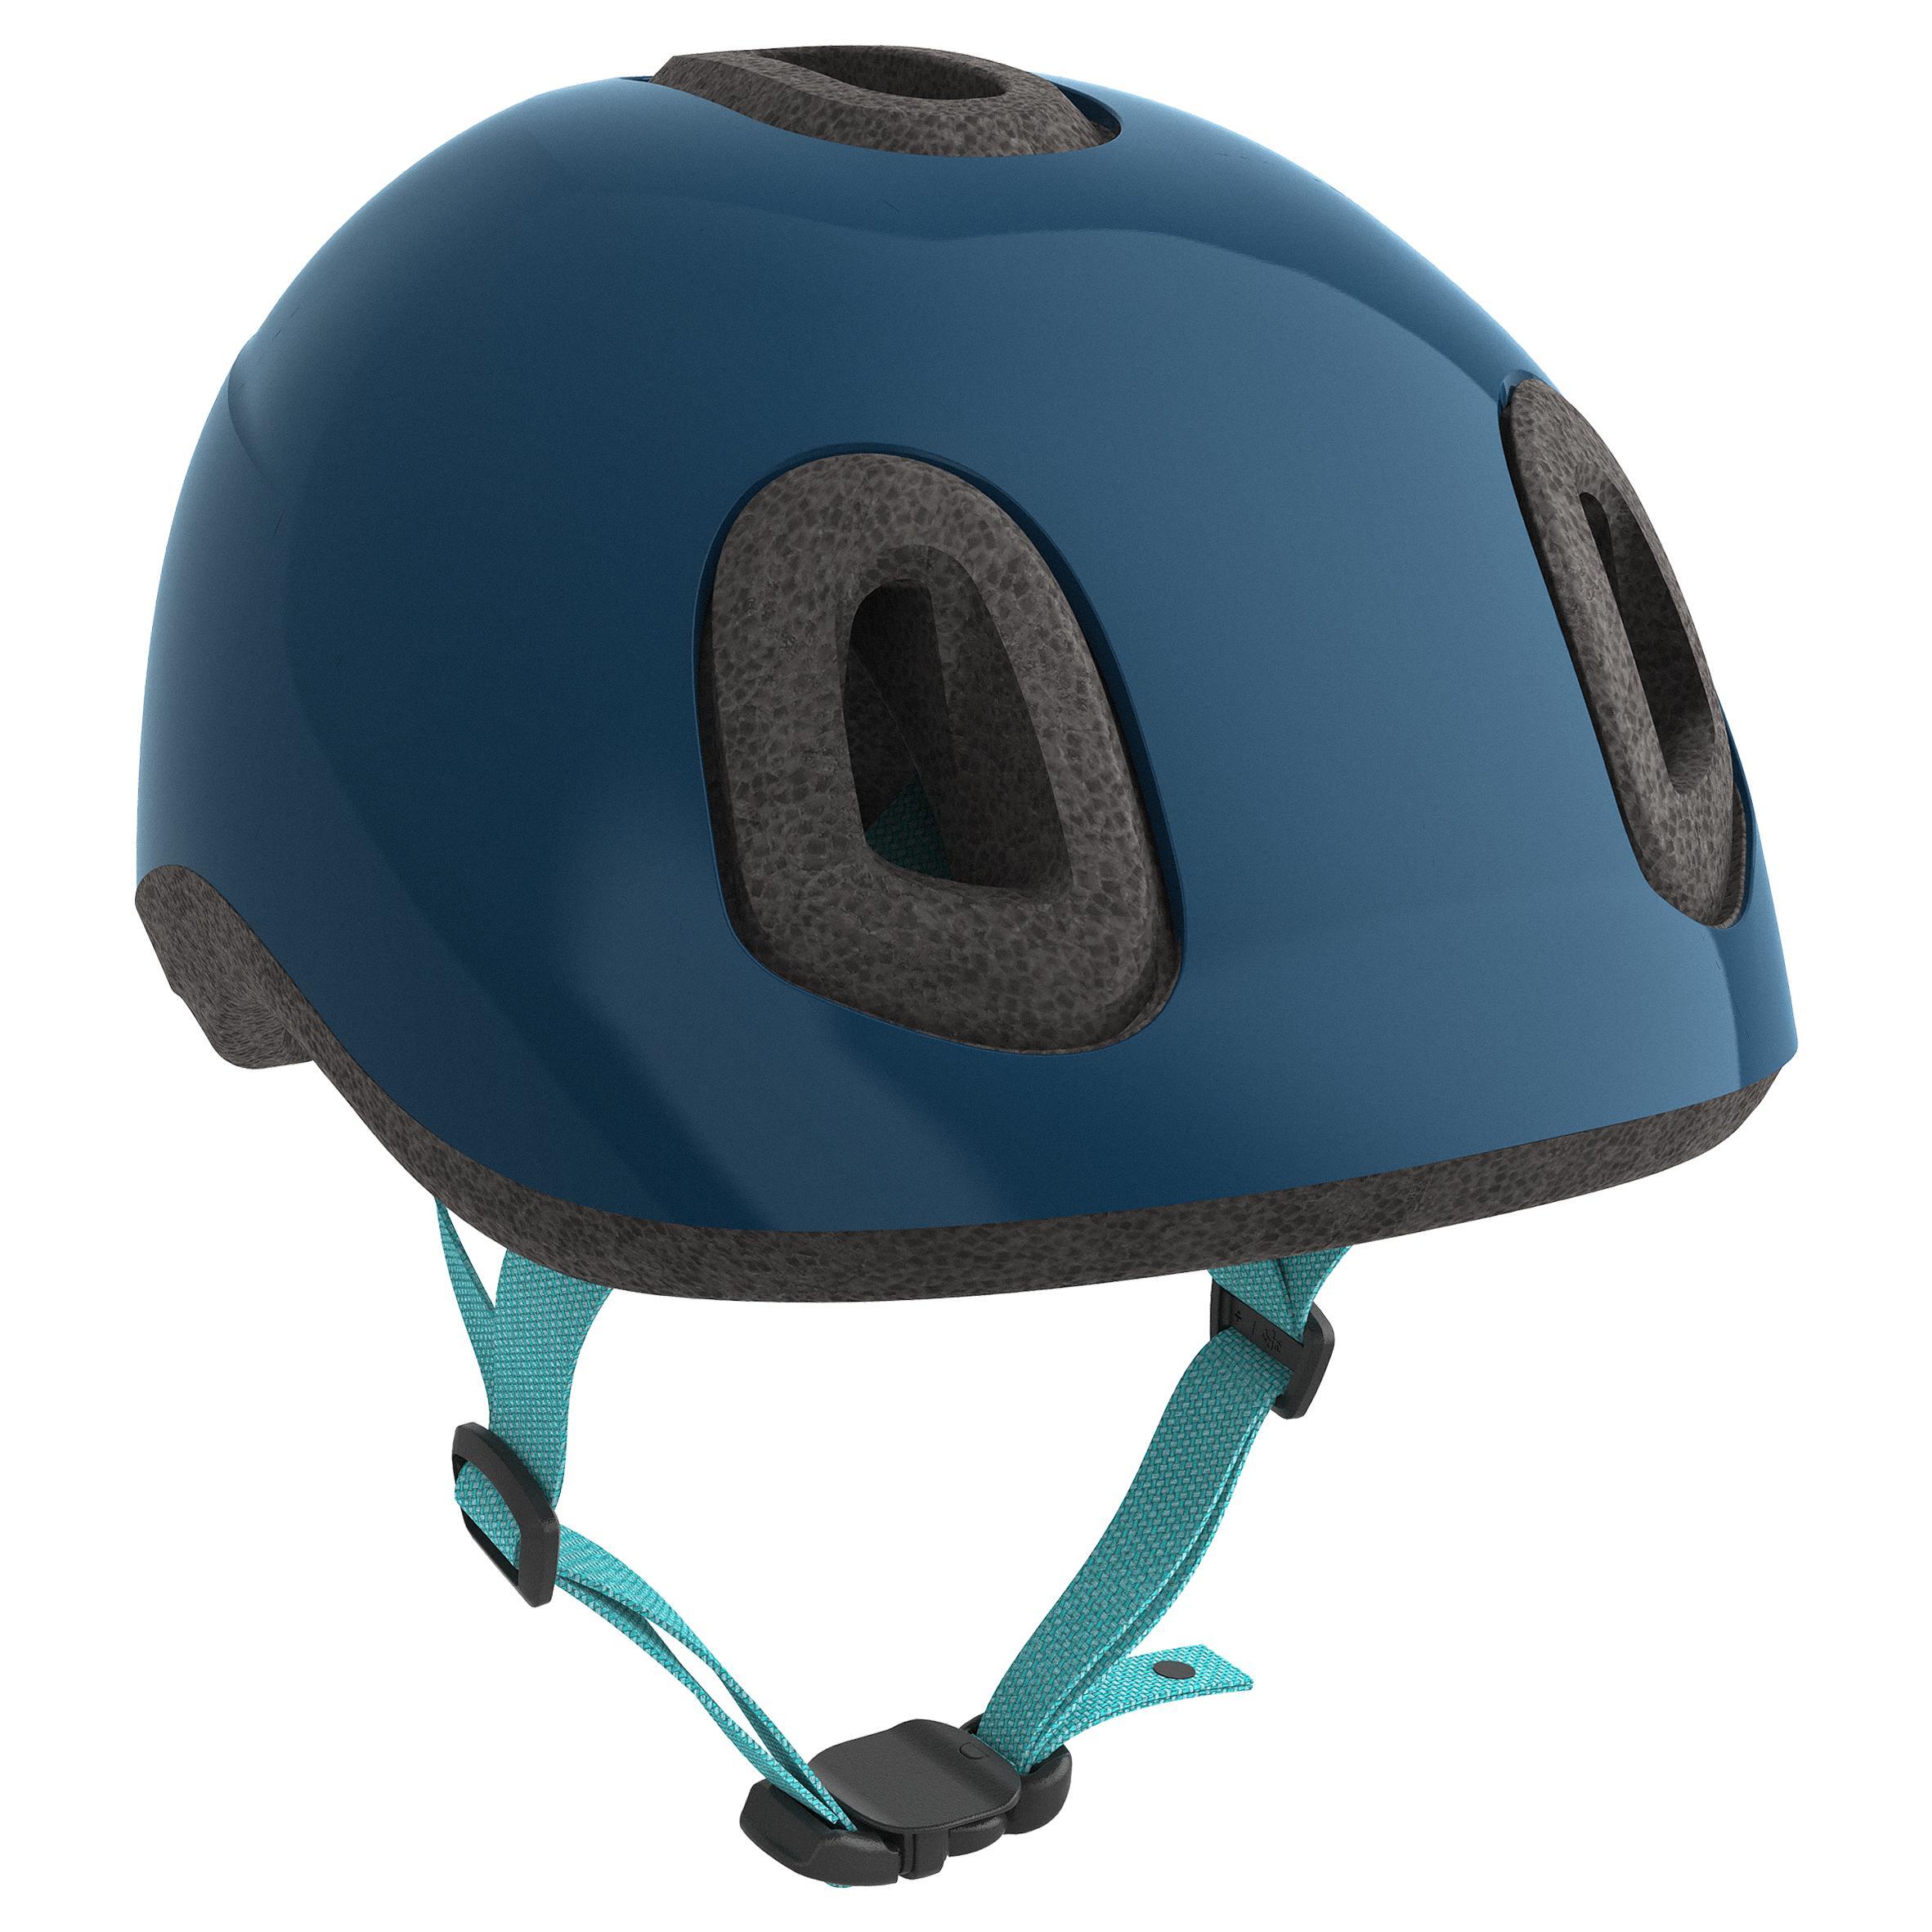 BTWIN 500 Baby Cycling Helmet - Blue